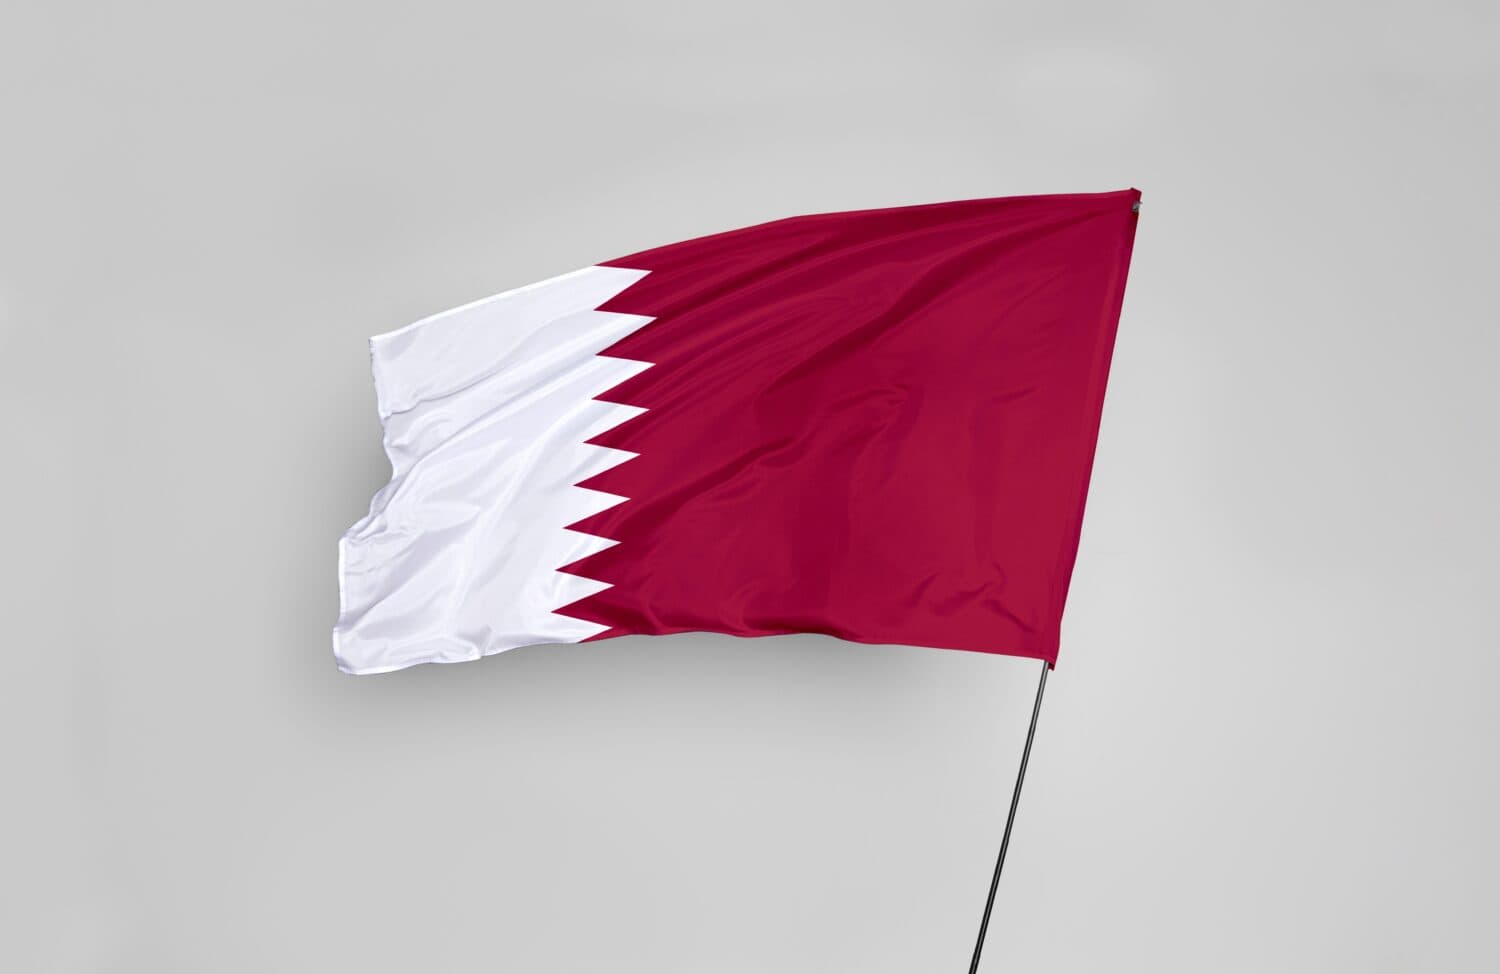 The Qatar flag 